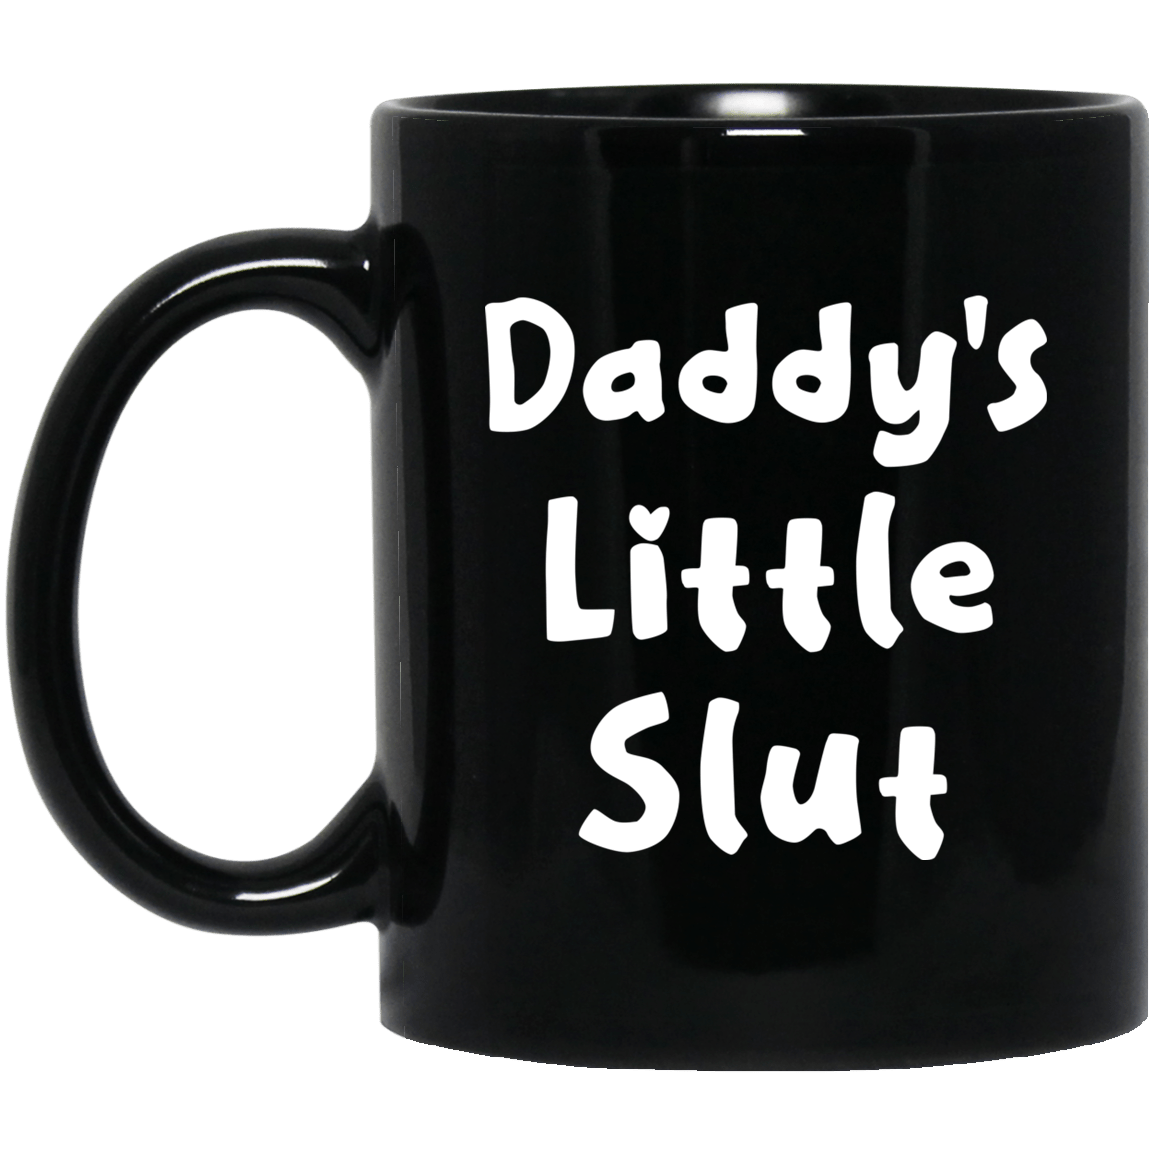 Daddy’s Little Slut Mug 0stees